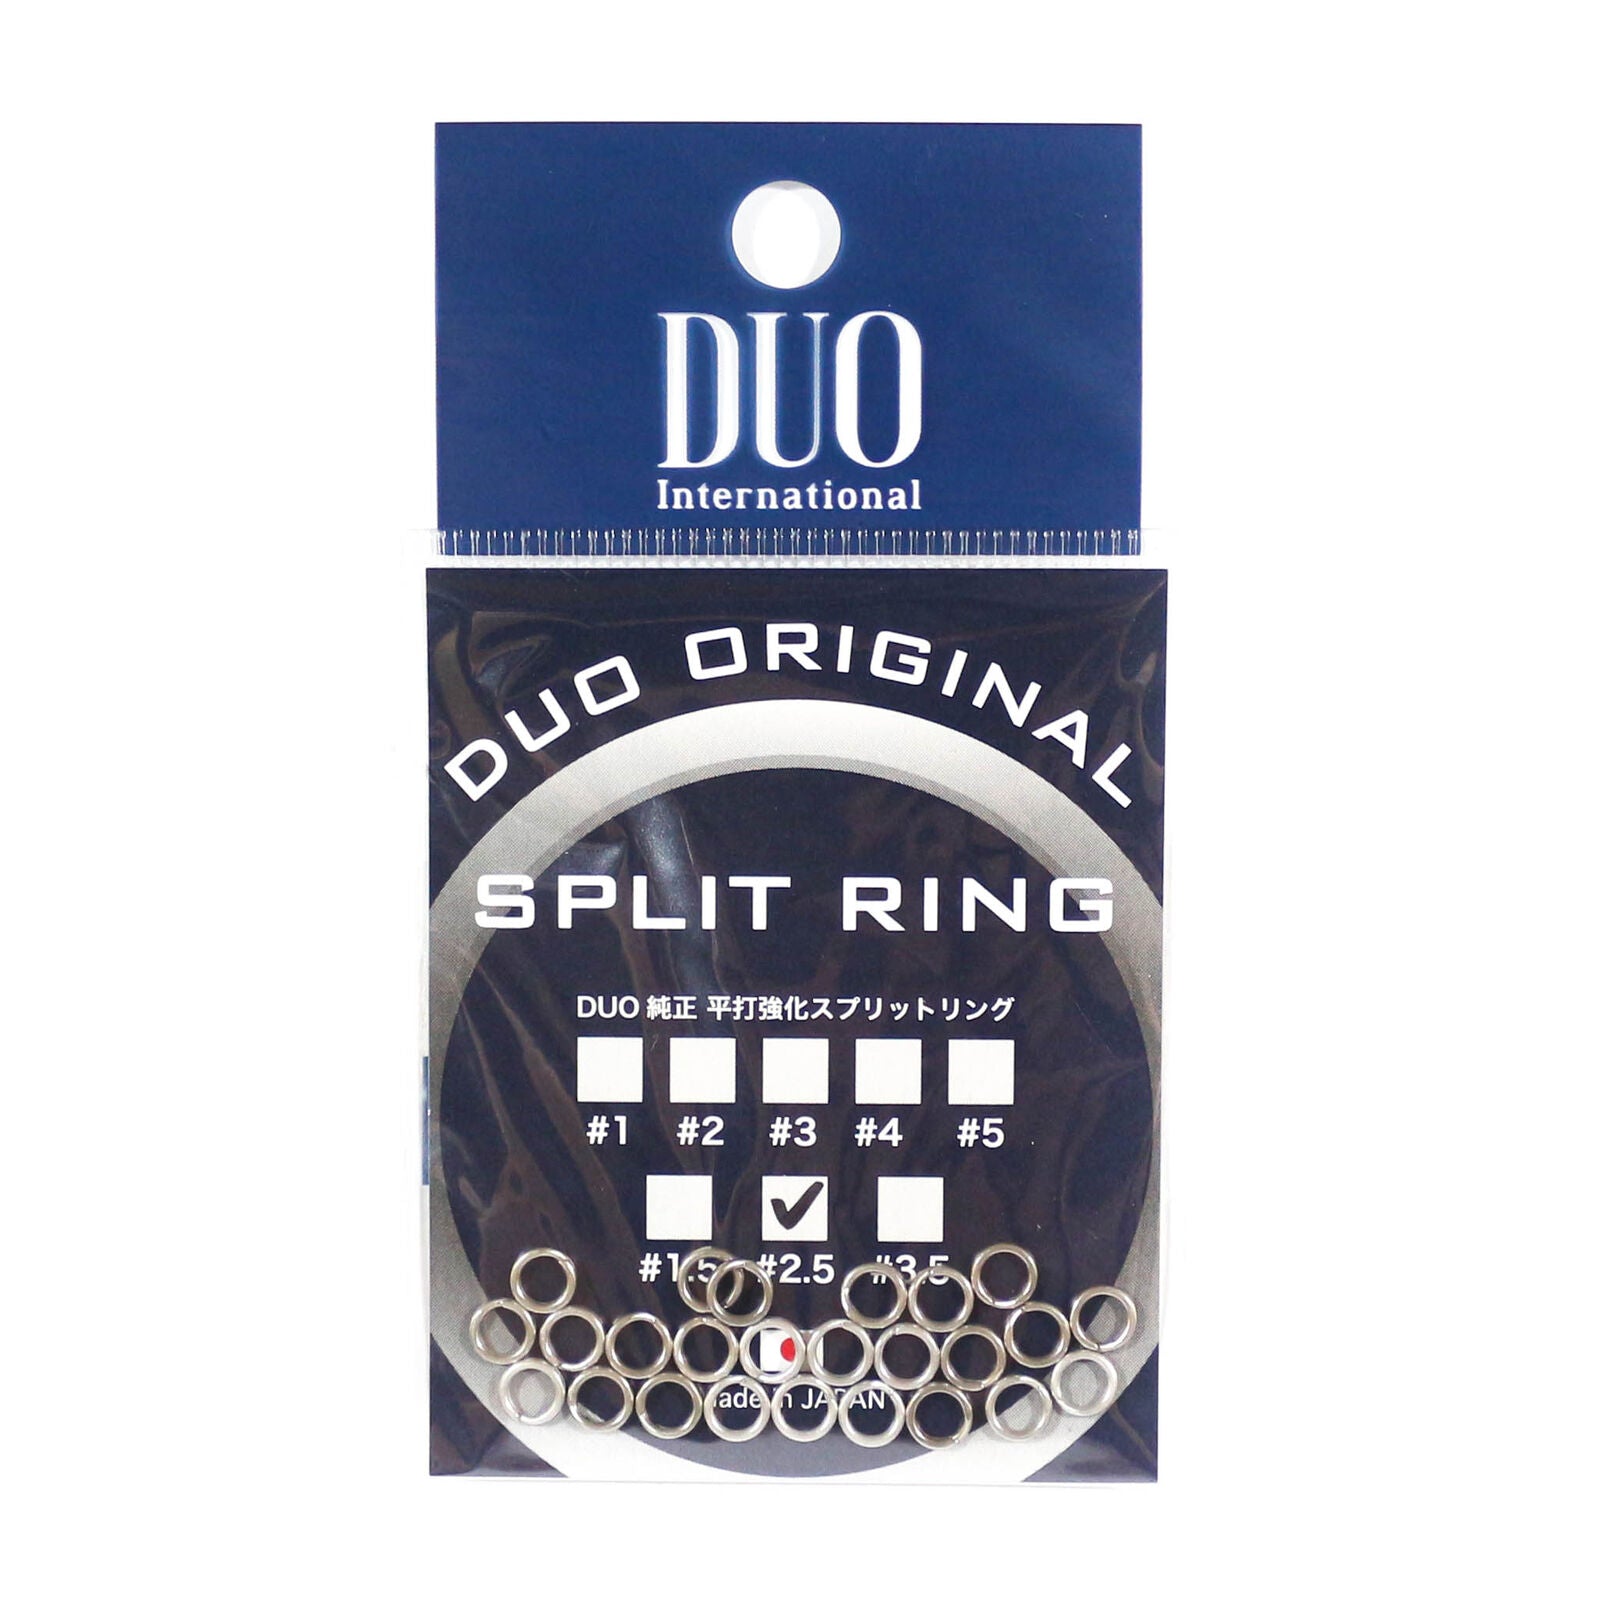 Duo Realis Original Split Ring